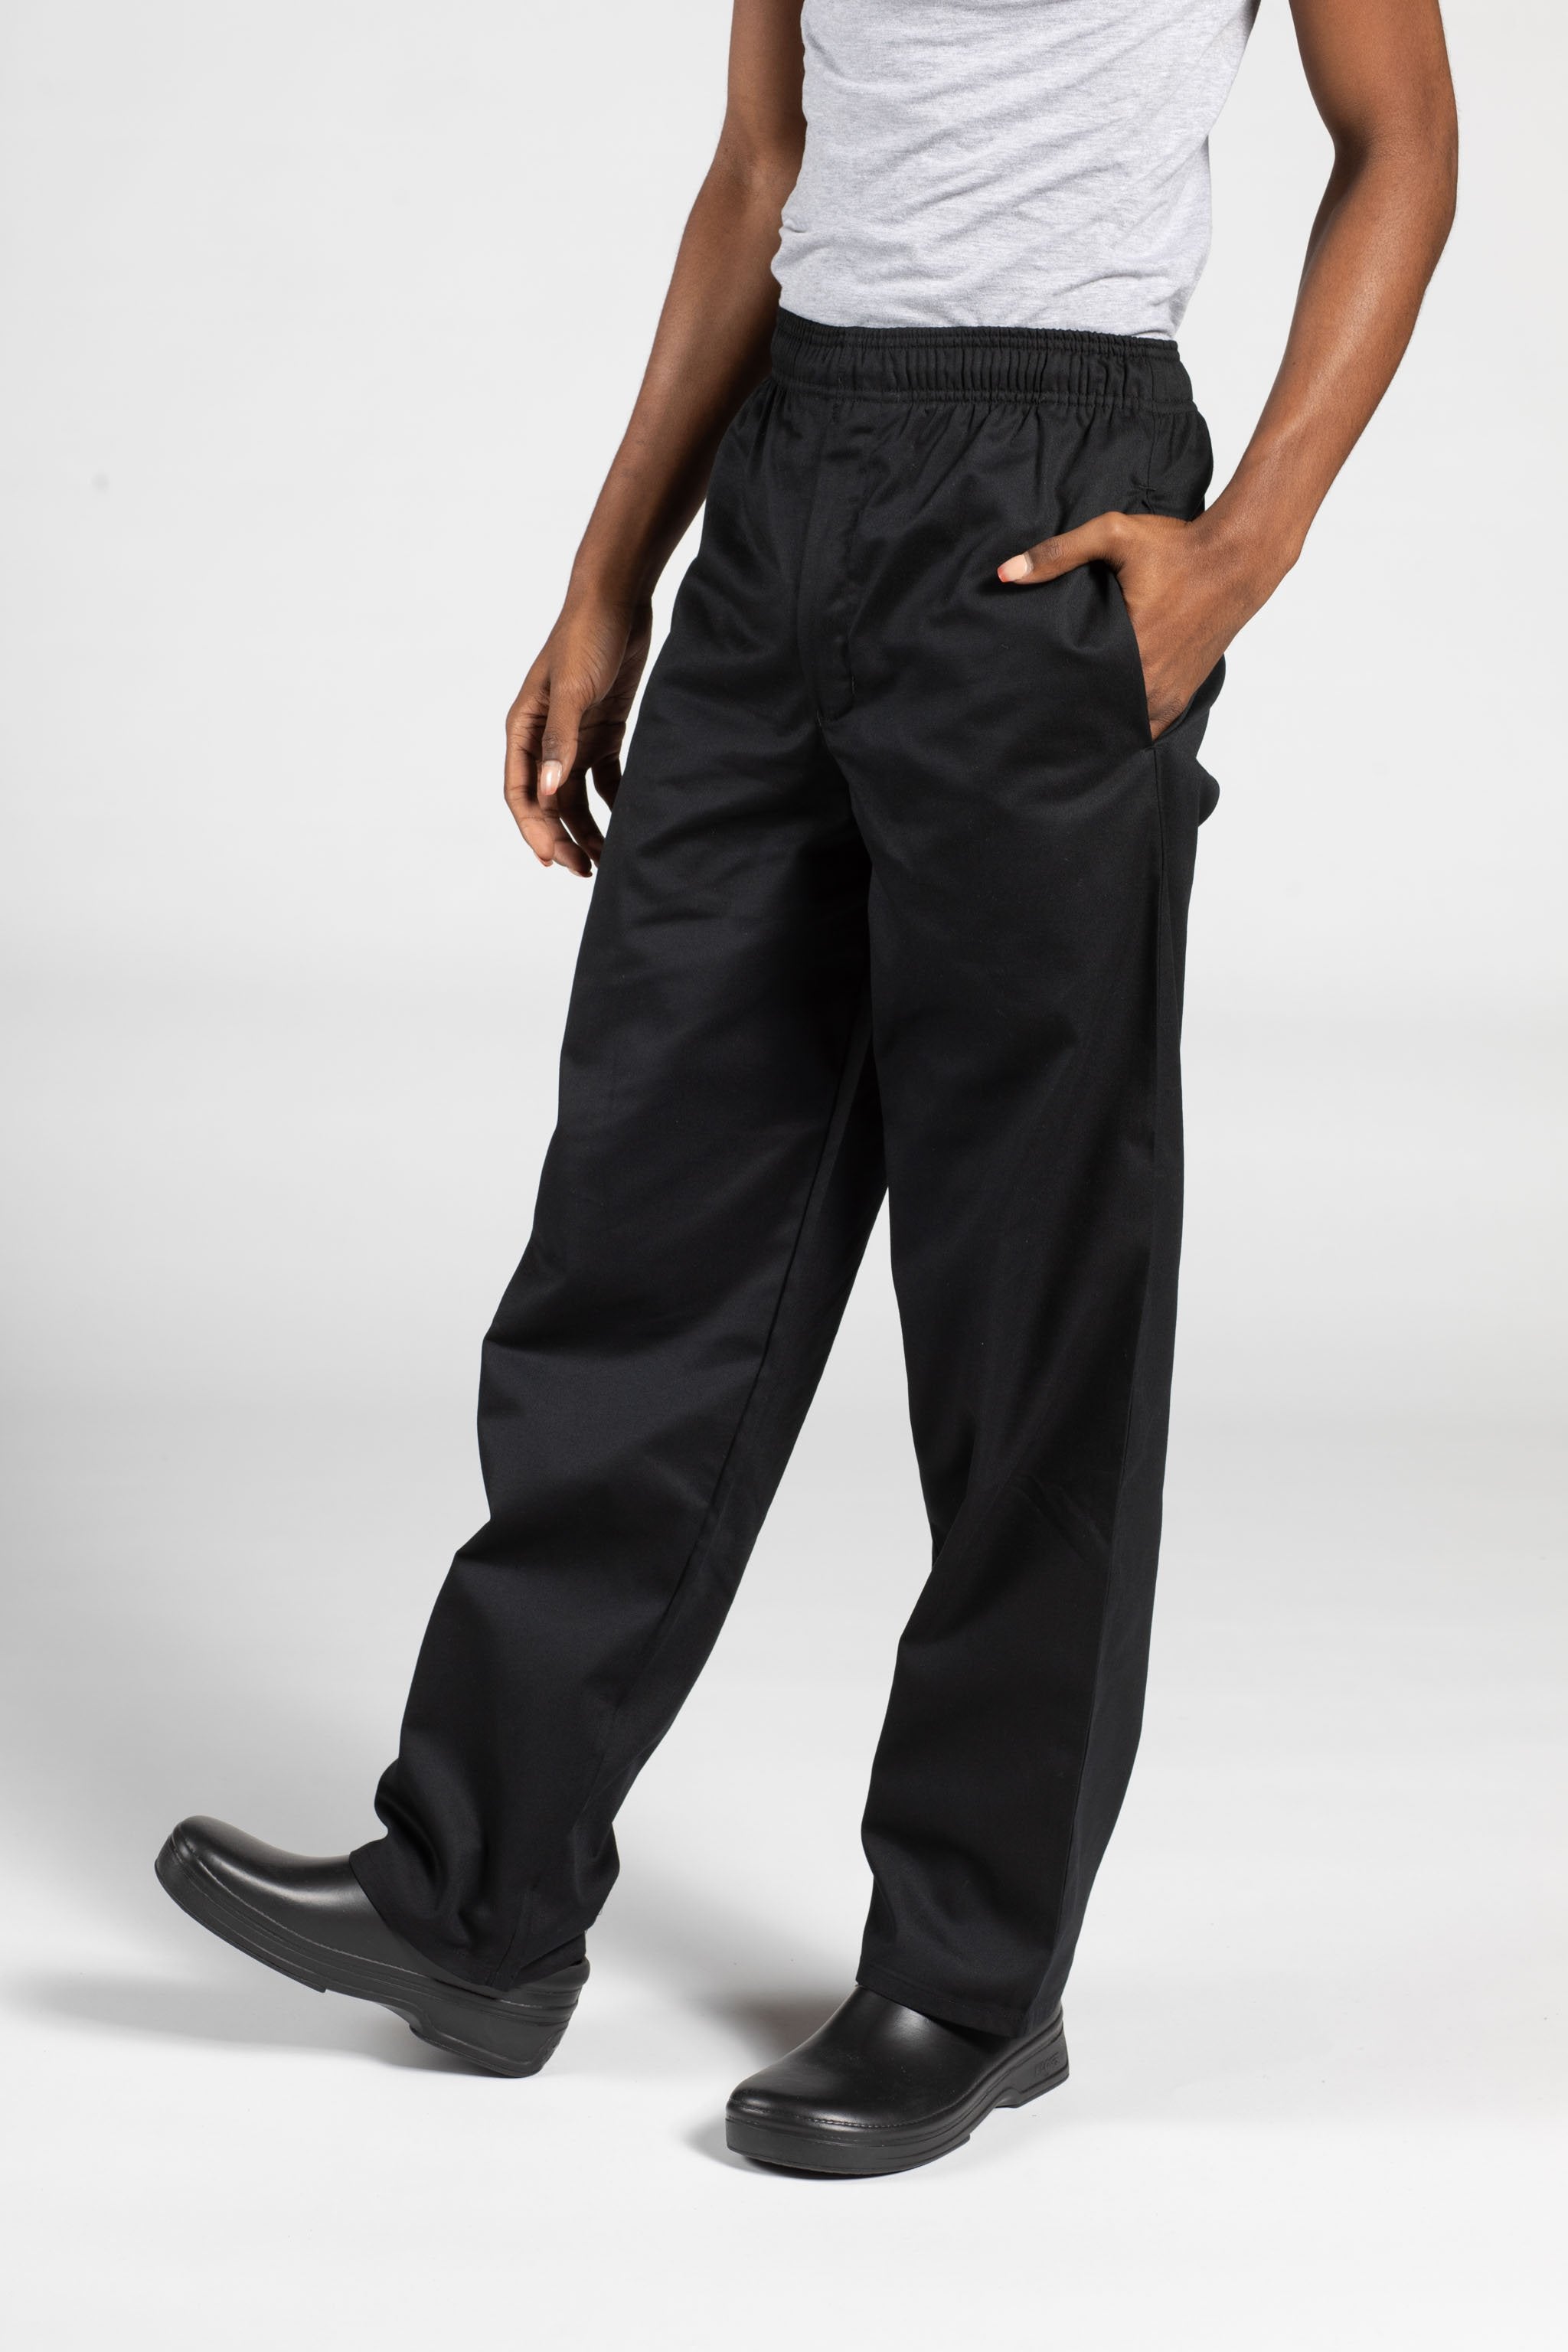 BC Textile Innovations - Chefs Pants | Buy Chef Pants | Chef Pants | Cook  Pants